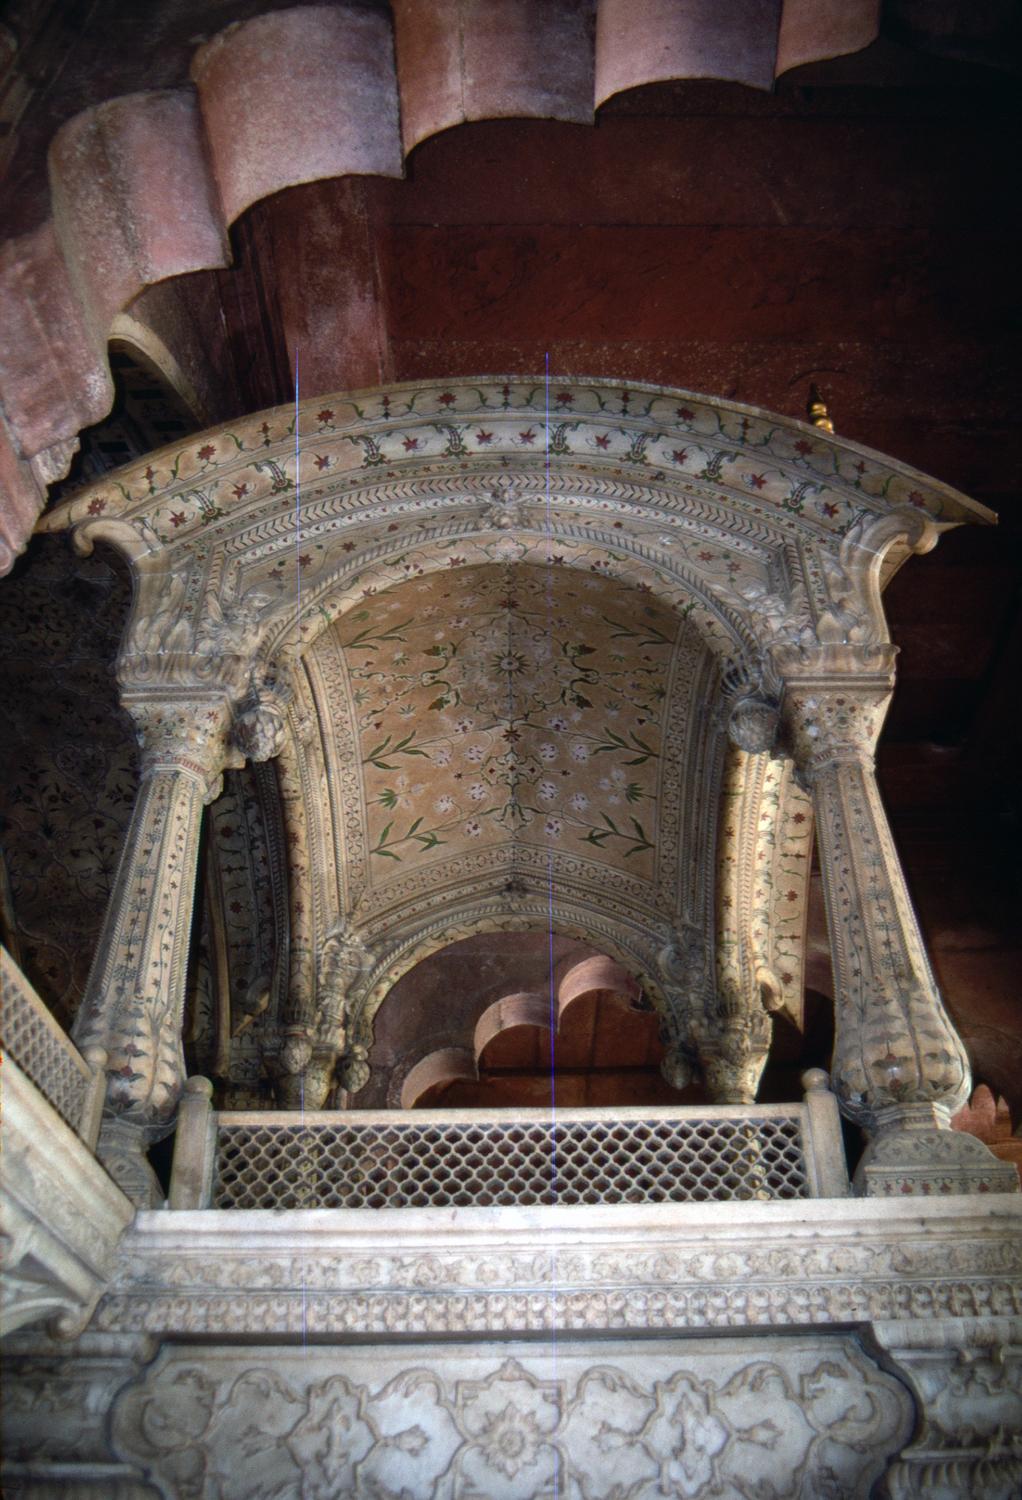 Interior view from north of Bangla Baldachin (throne)